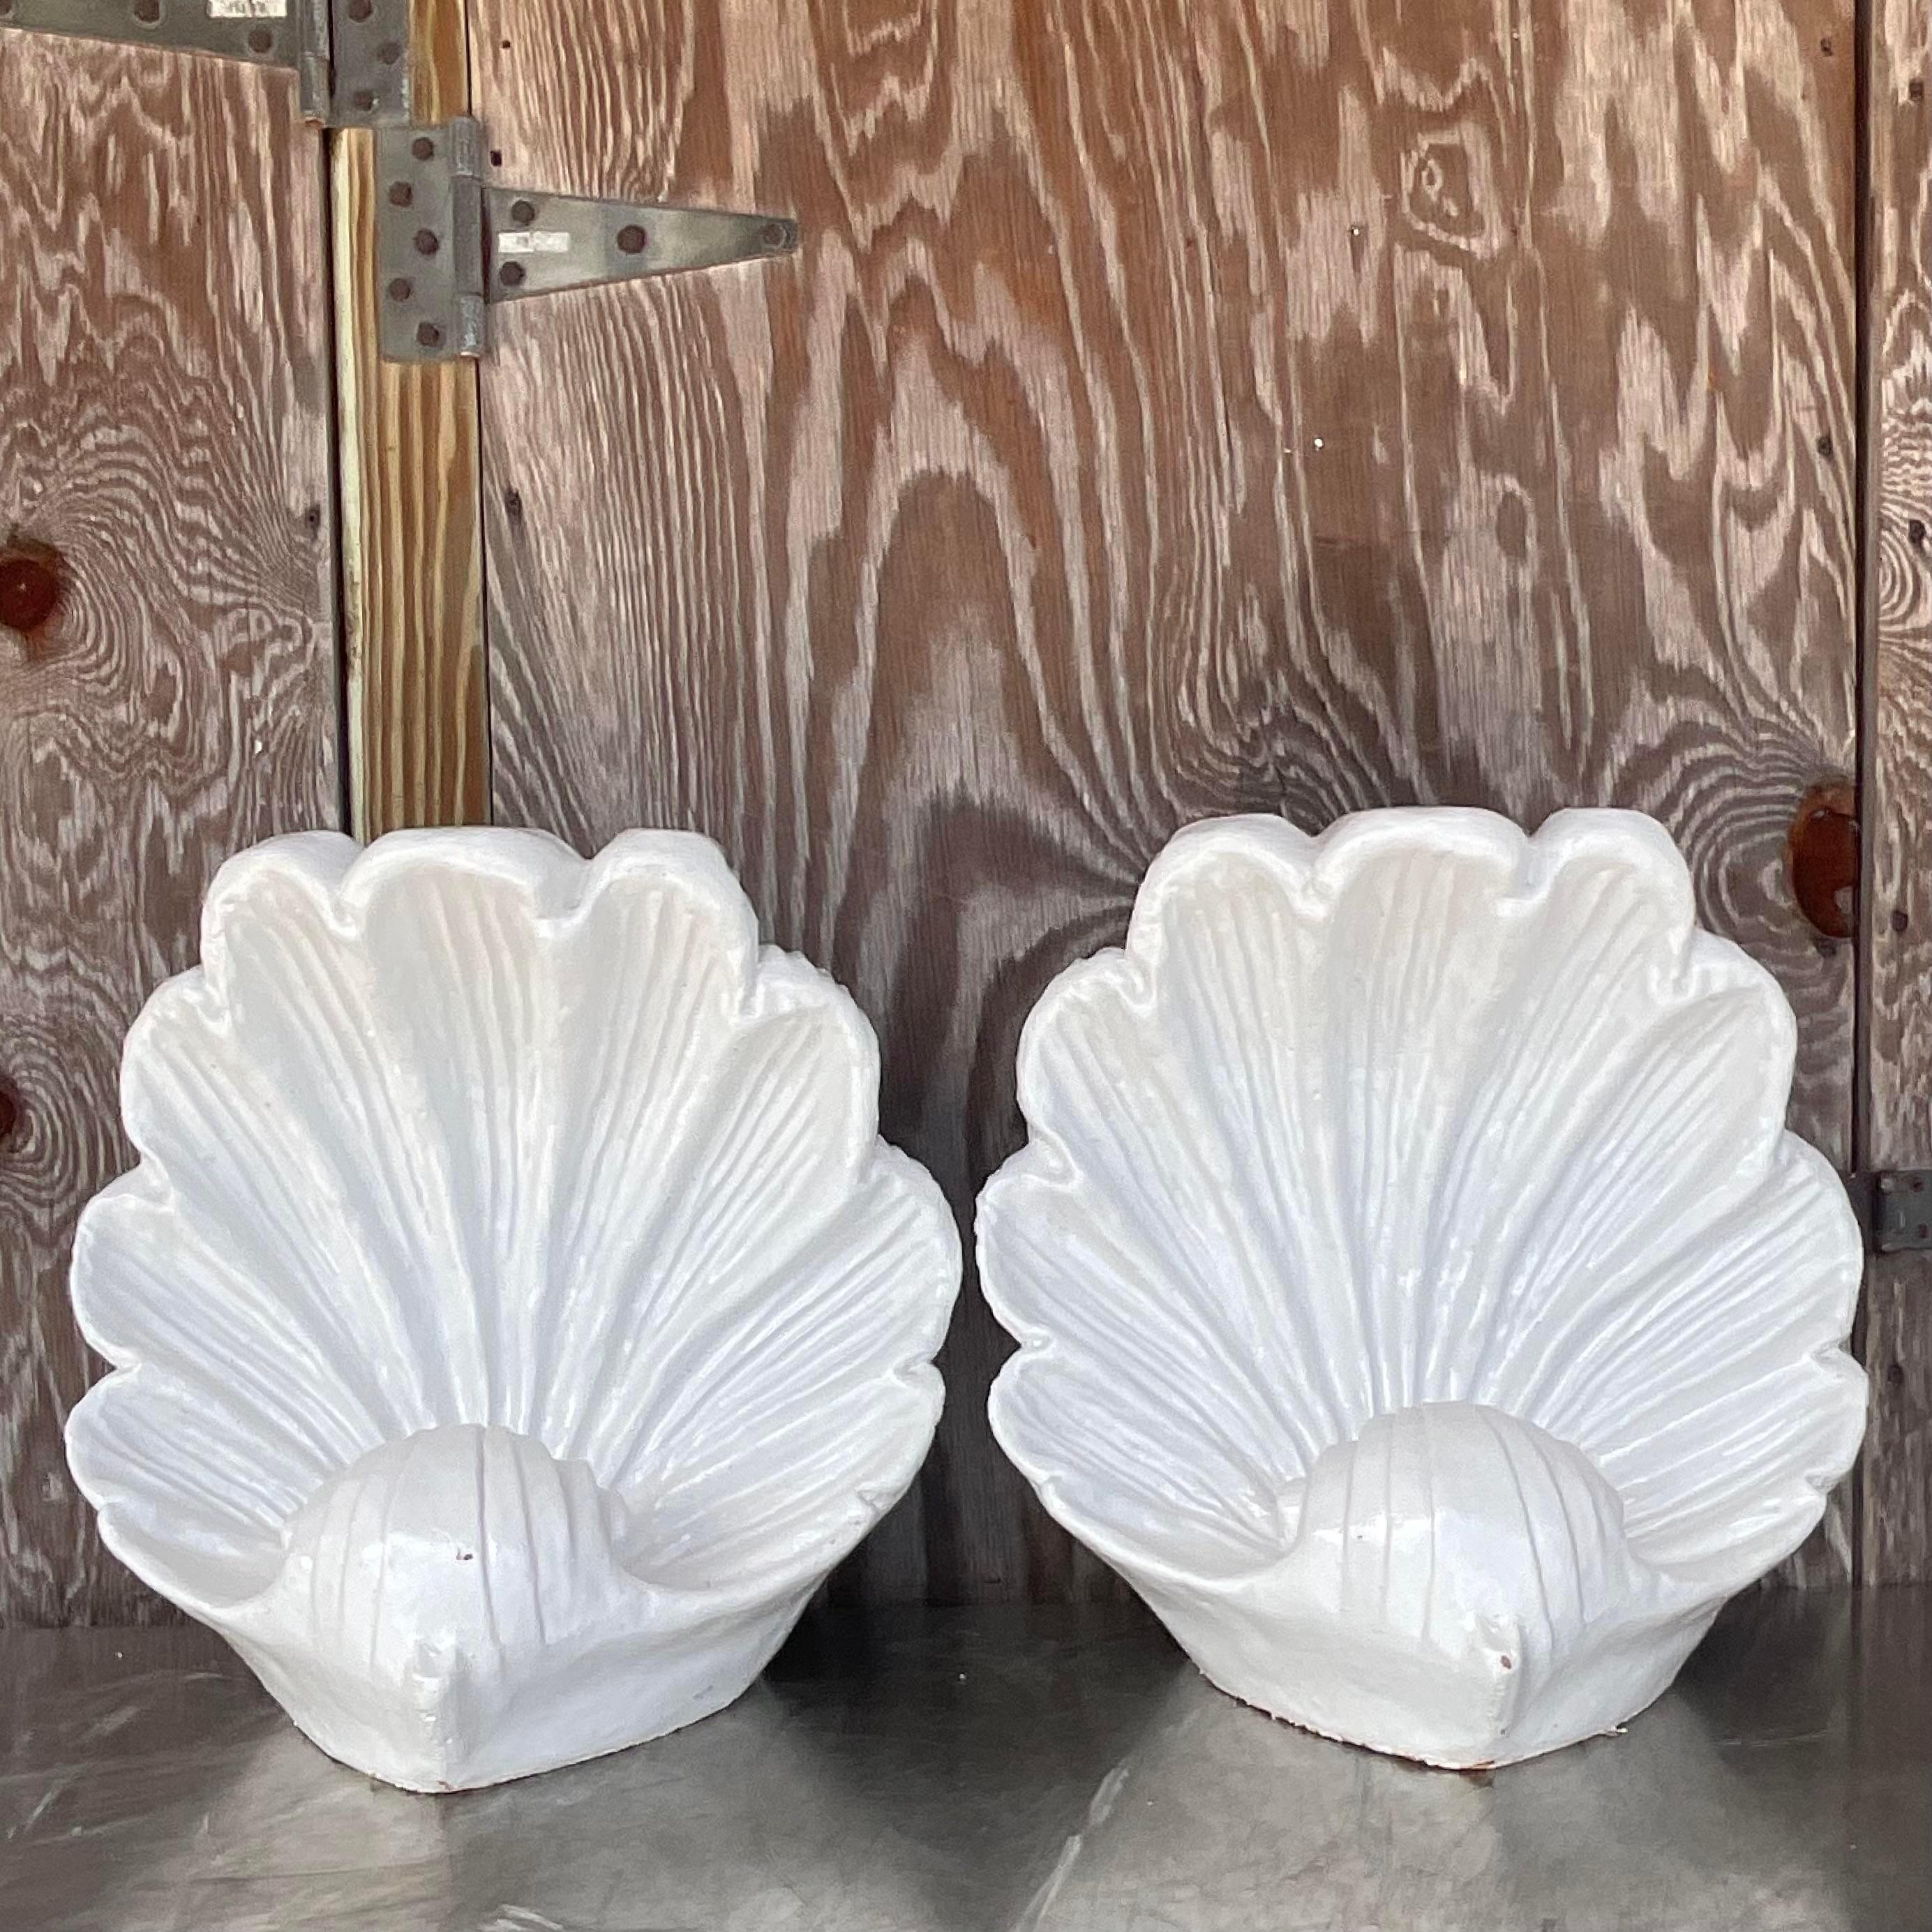 American Vintage Coastal Glazed Ceramic Clam Shells - a Pair For Sale